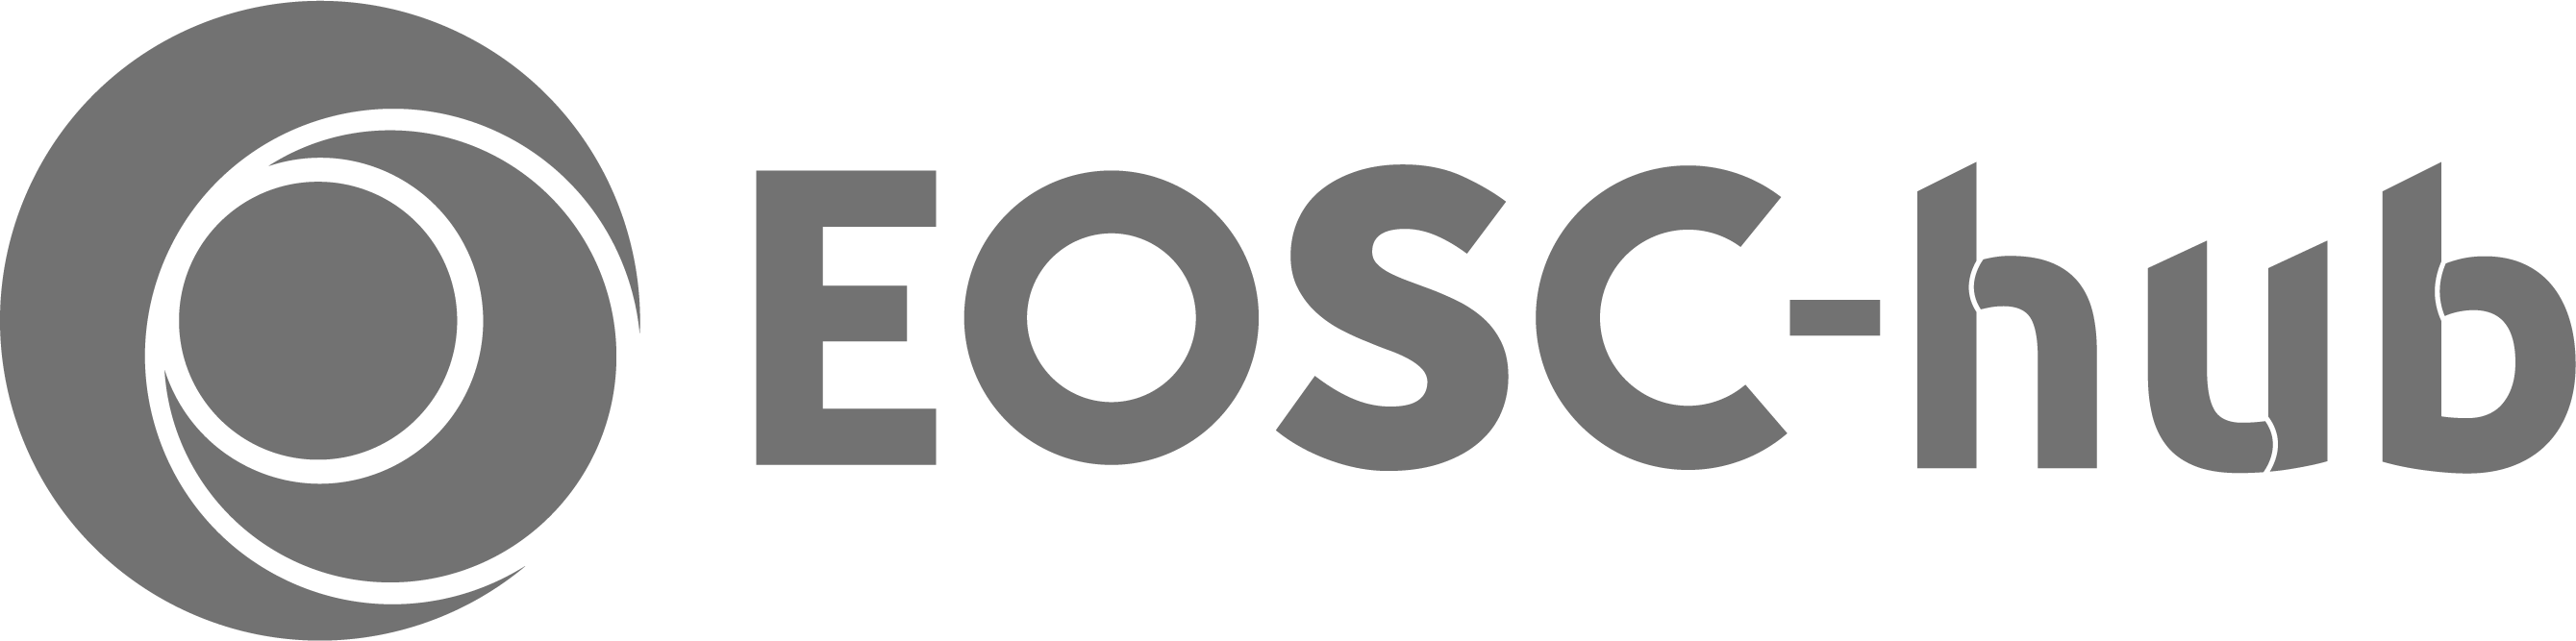 Flag of EOSC, the european open science cloud